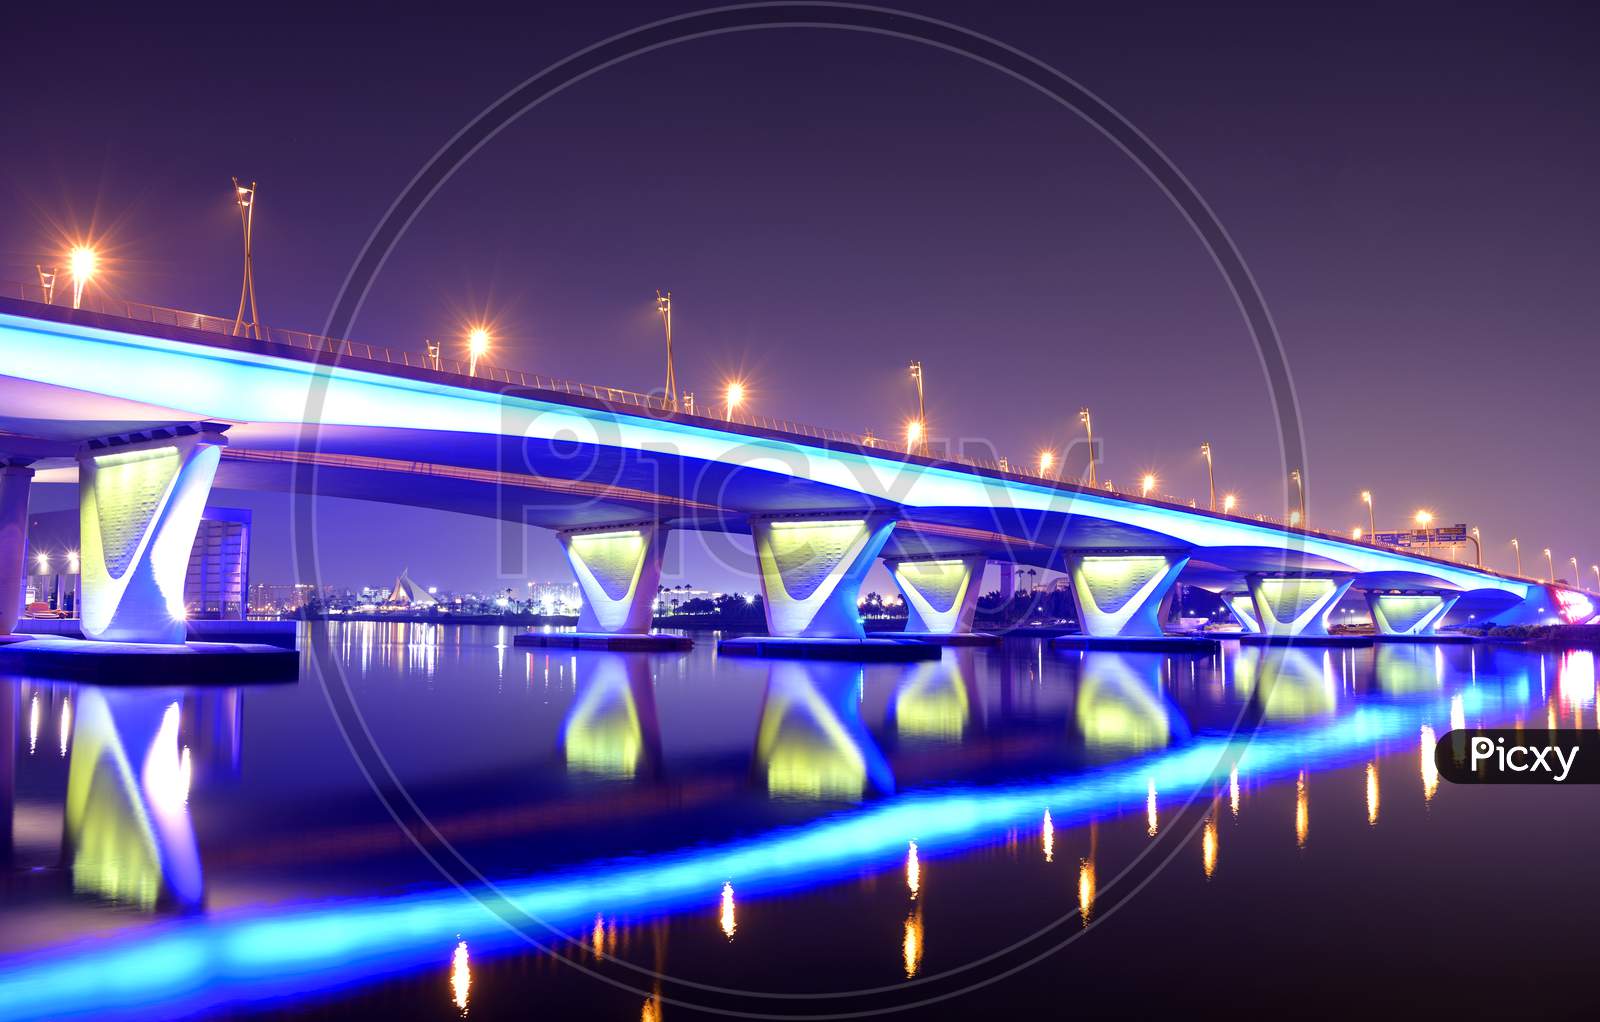 5Th November 2020 Dubai Uae. Beautiful Winter Night View Of The Blue Illuminated Al Gharhoud Bridge In Dubai, United Arab Emirates With The Colorful Reflection On The Water.